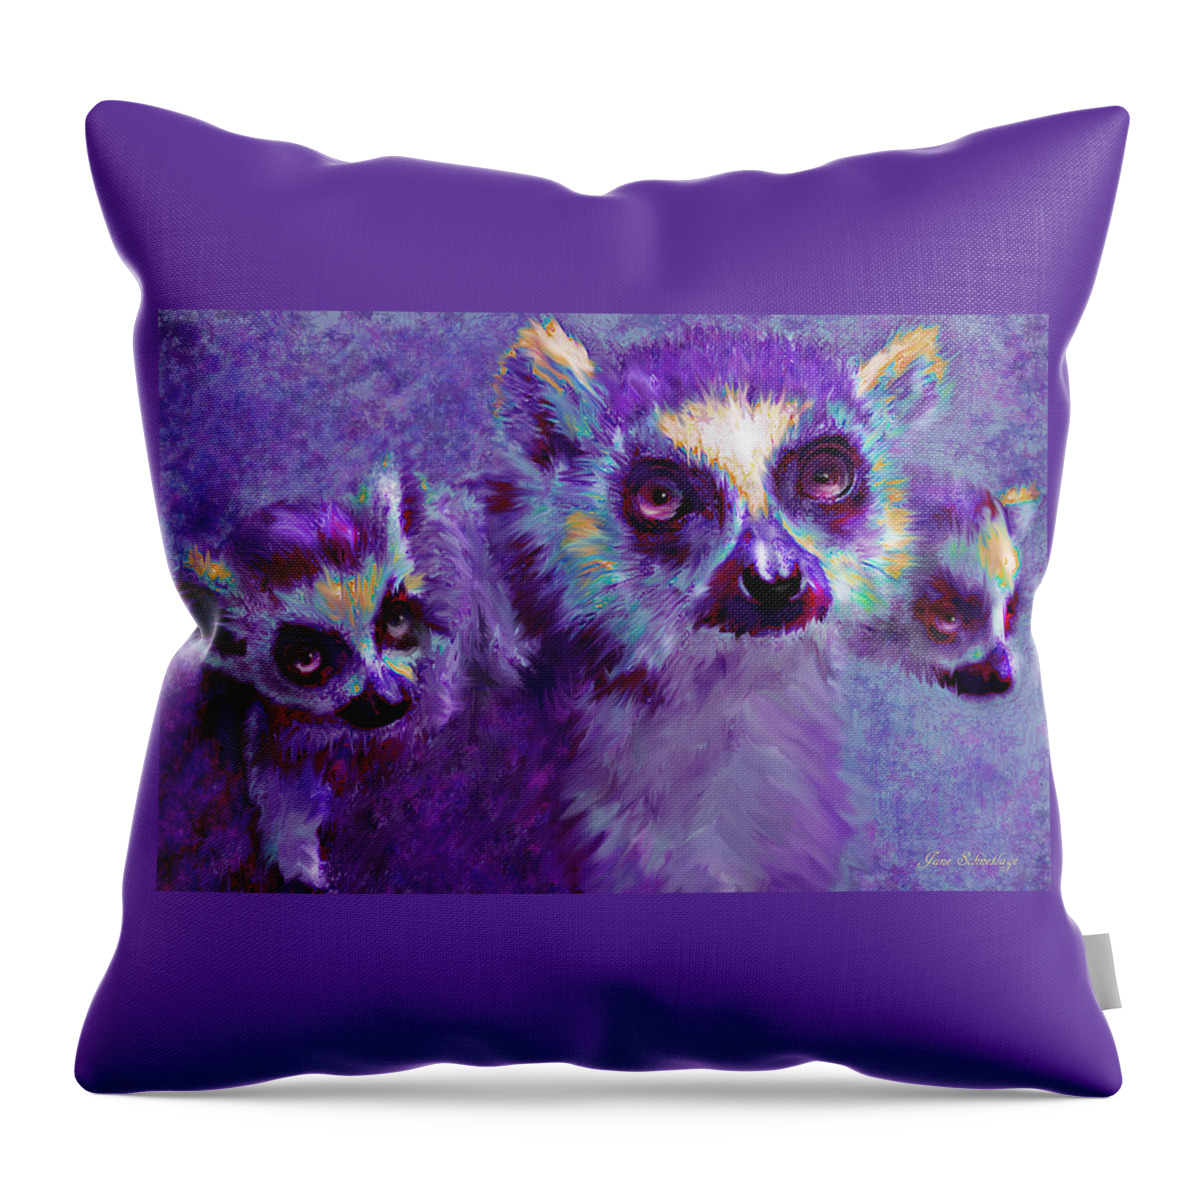 Lemur Throw Pillow featuring the digital art Leaping Lemurs by Jane Schnetlage